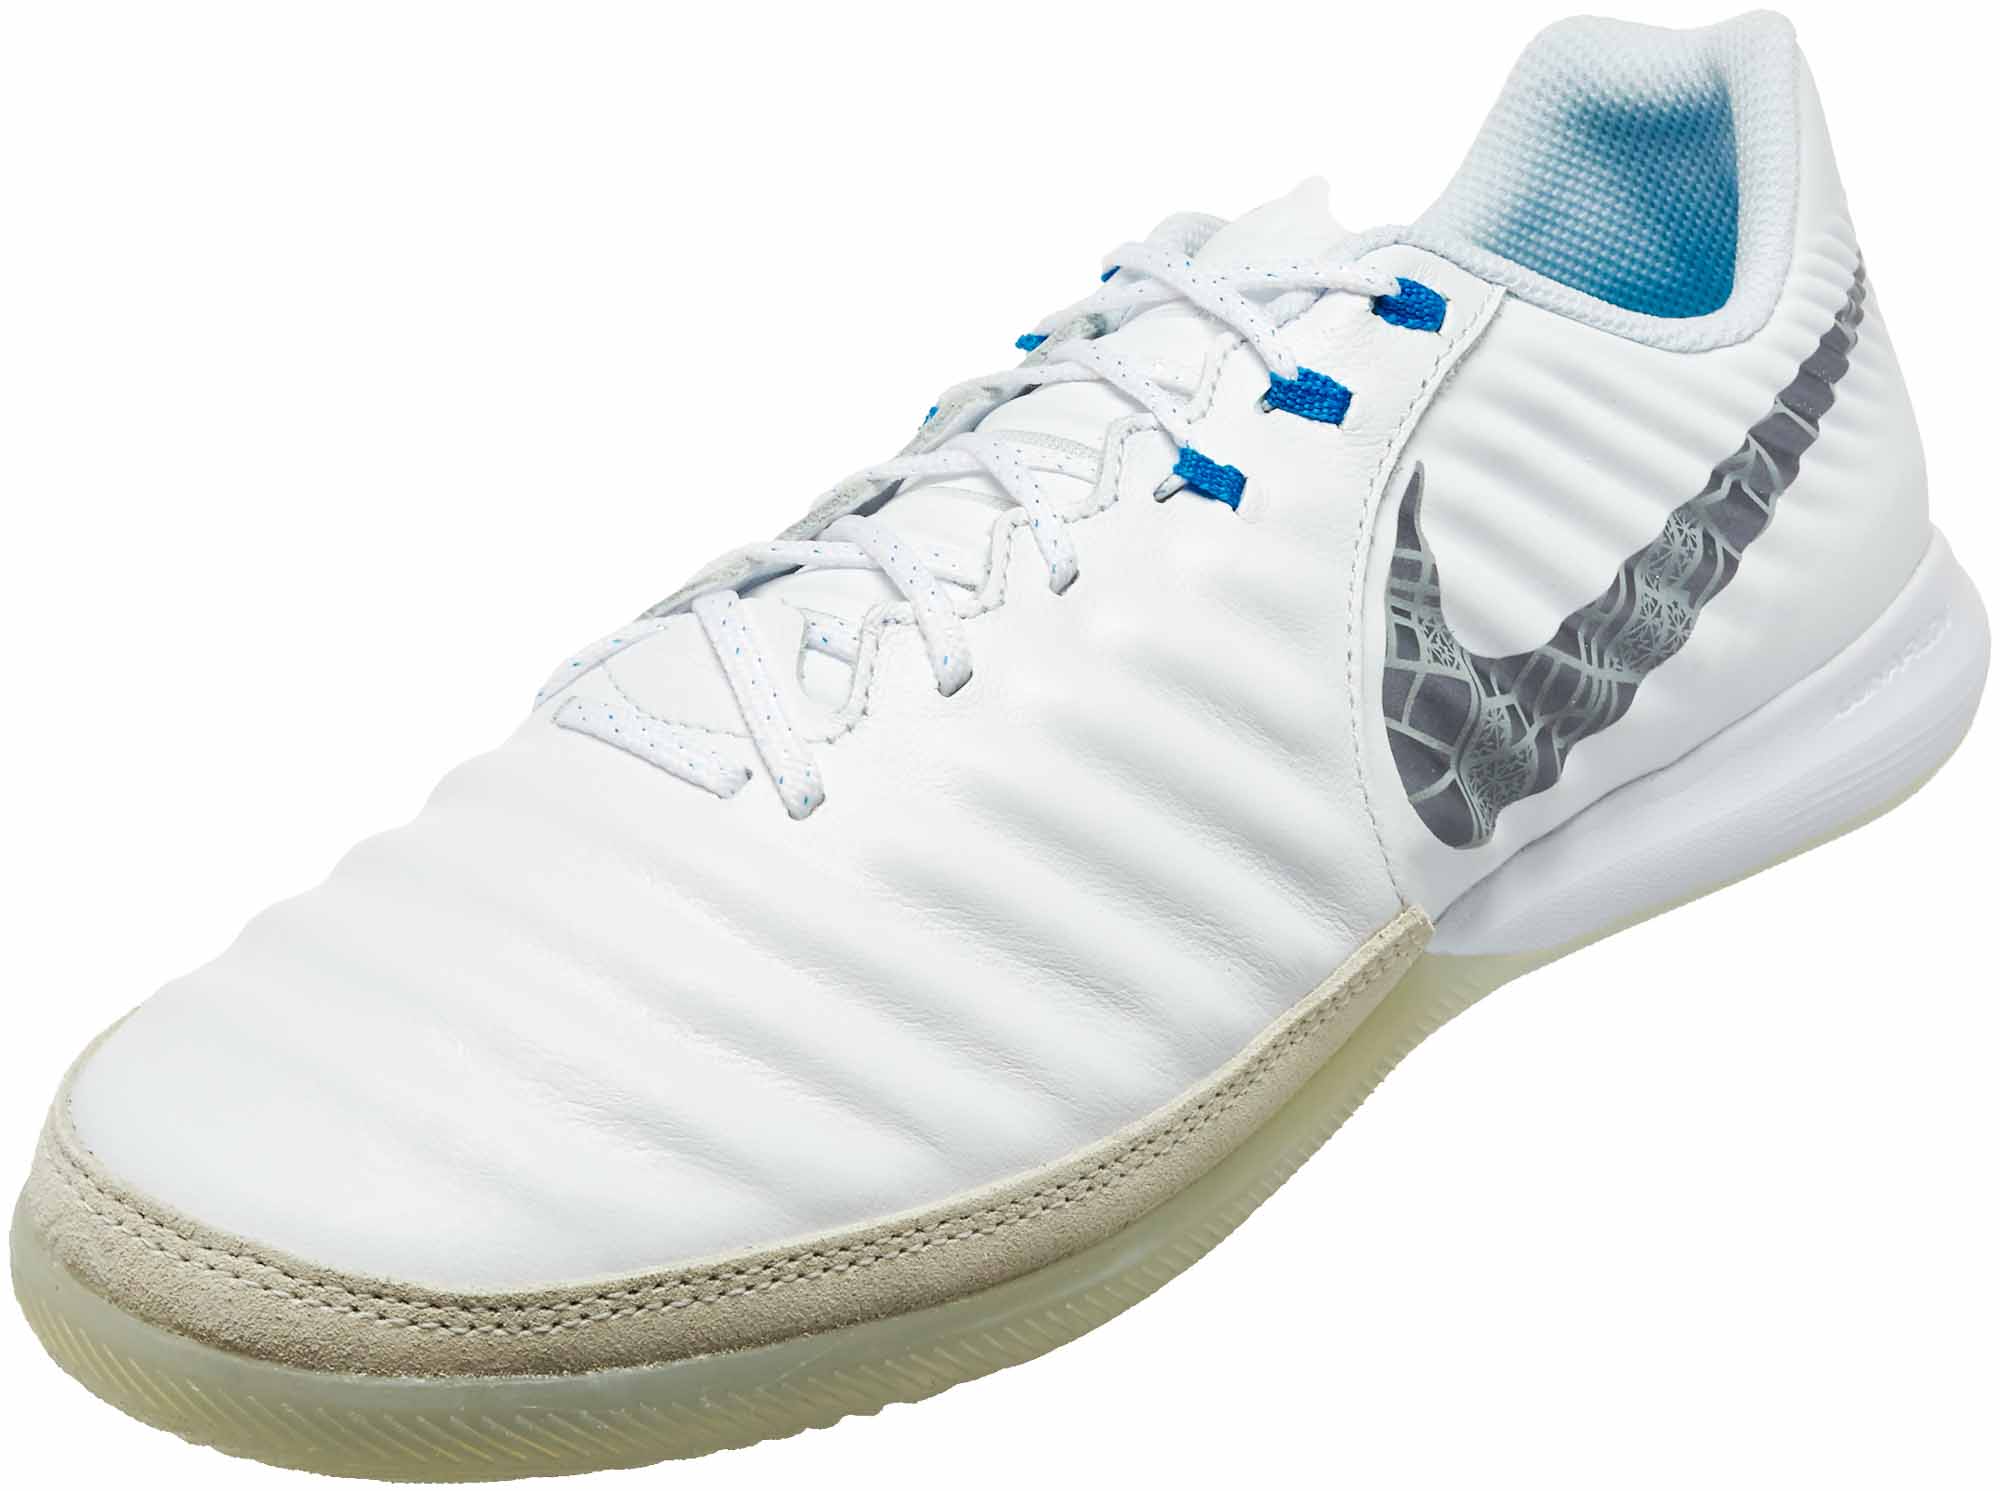 Nike Tiempo LegendX 7 Pro IC - White/Metallic Cool Grey/Blue Hero -  SoccerPro